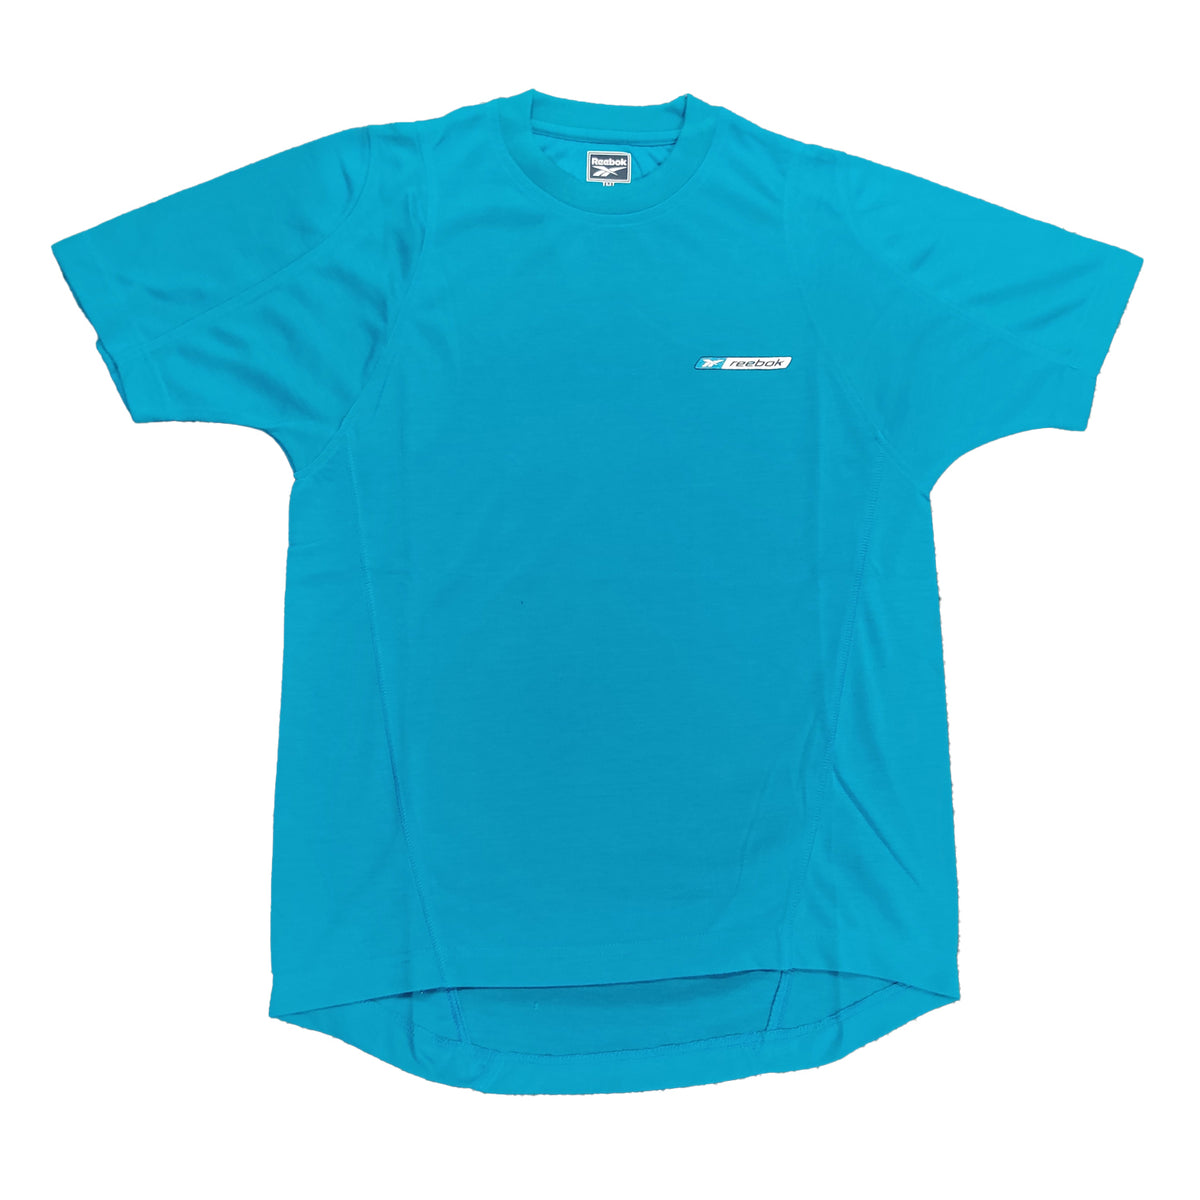 Reebok Mens Clearance Bright Blue Crew T-Shirt - Medium